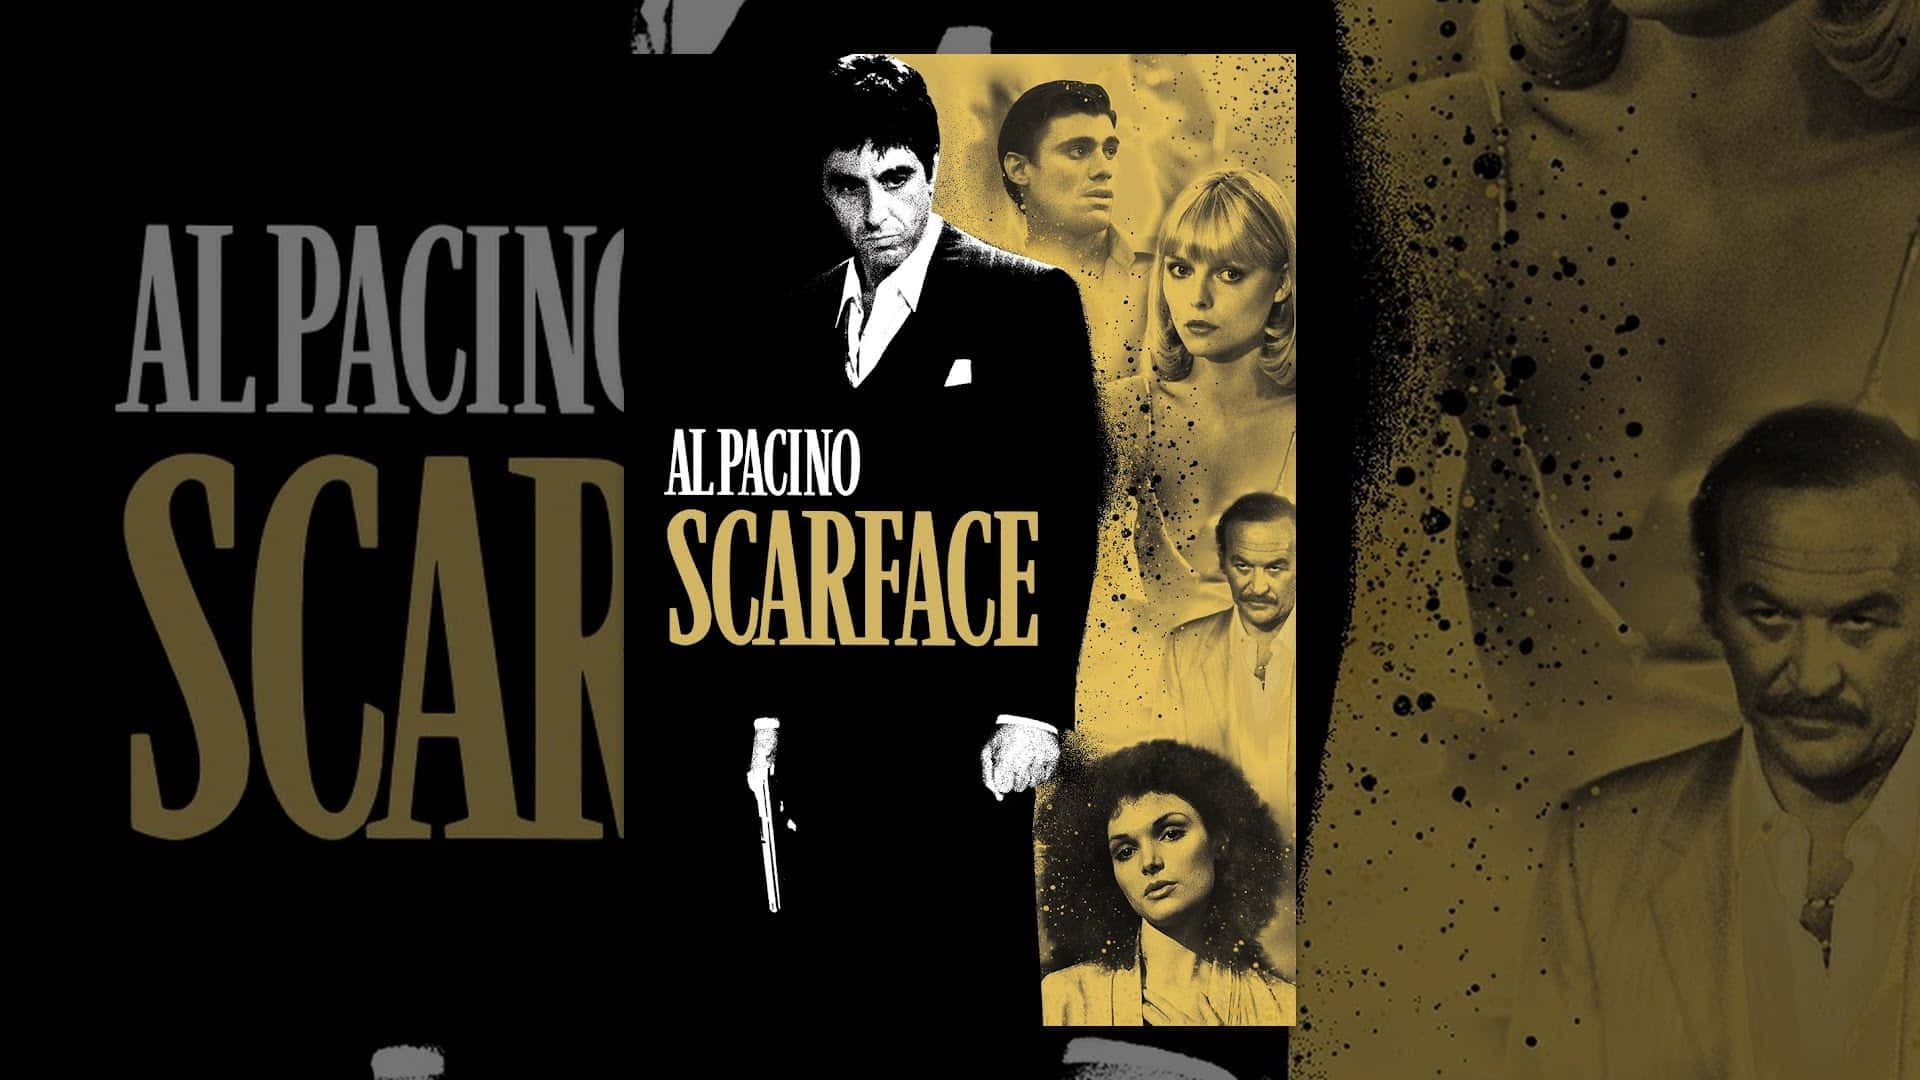 Scarface Tony Montana: The Wild And Reckless Anti-hero